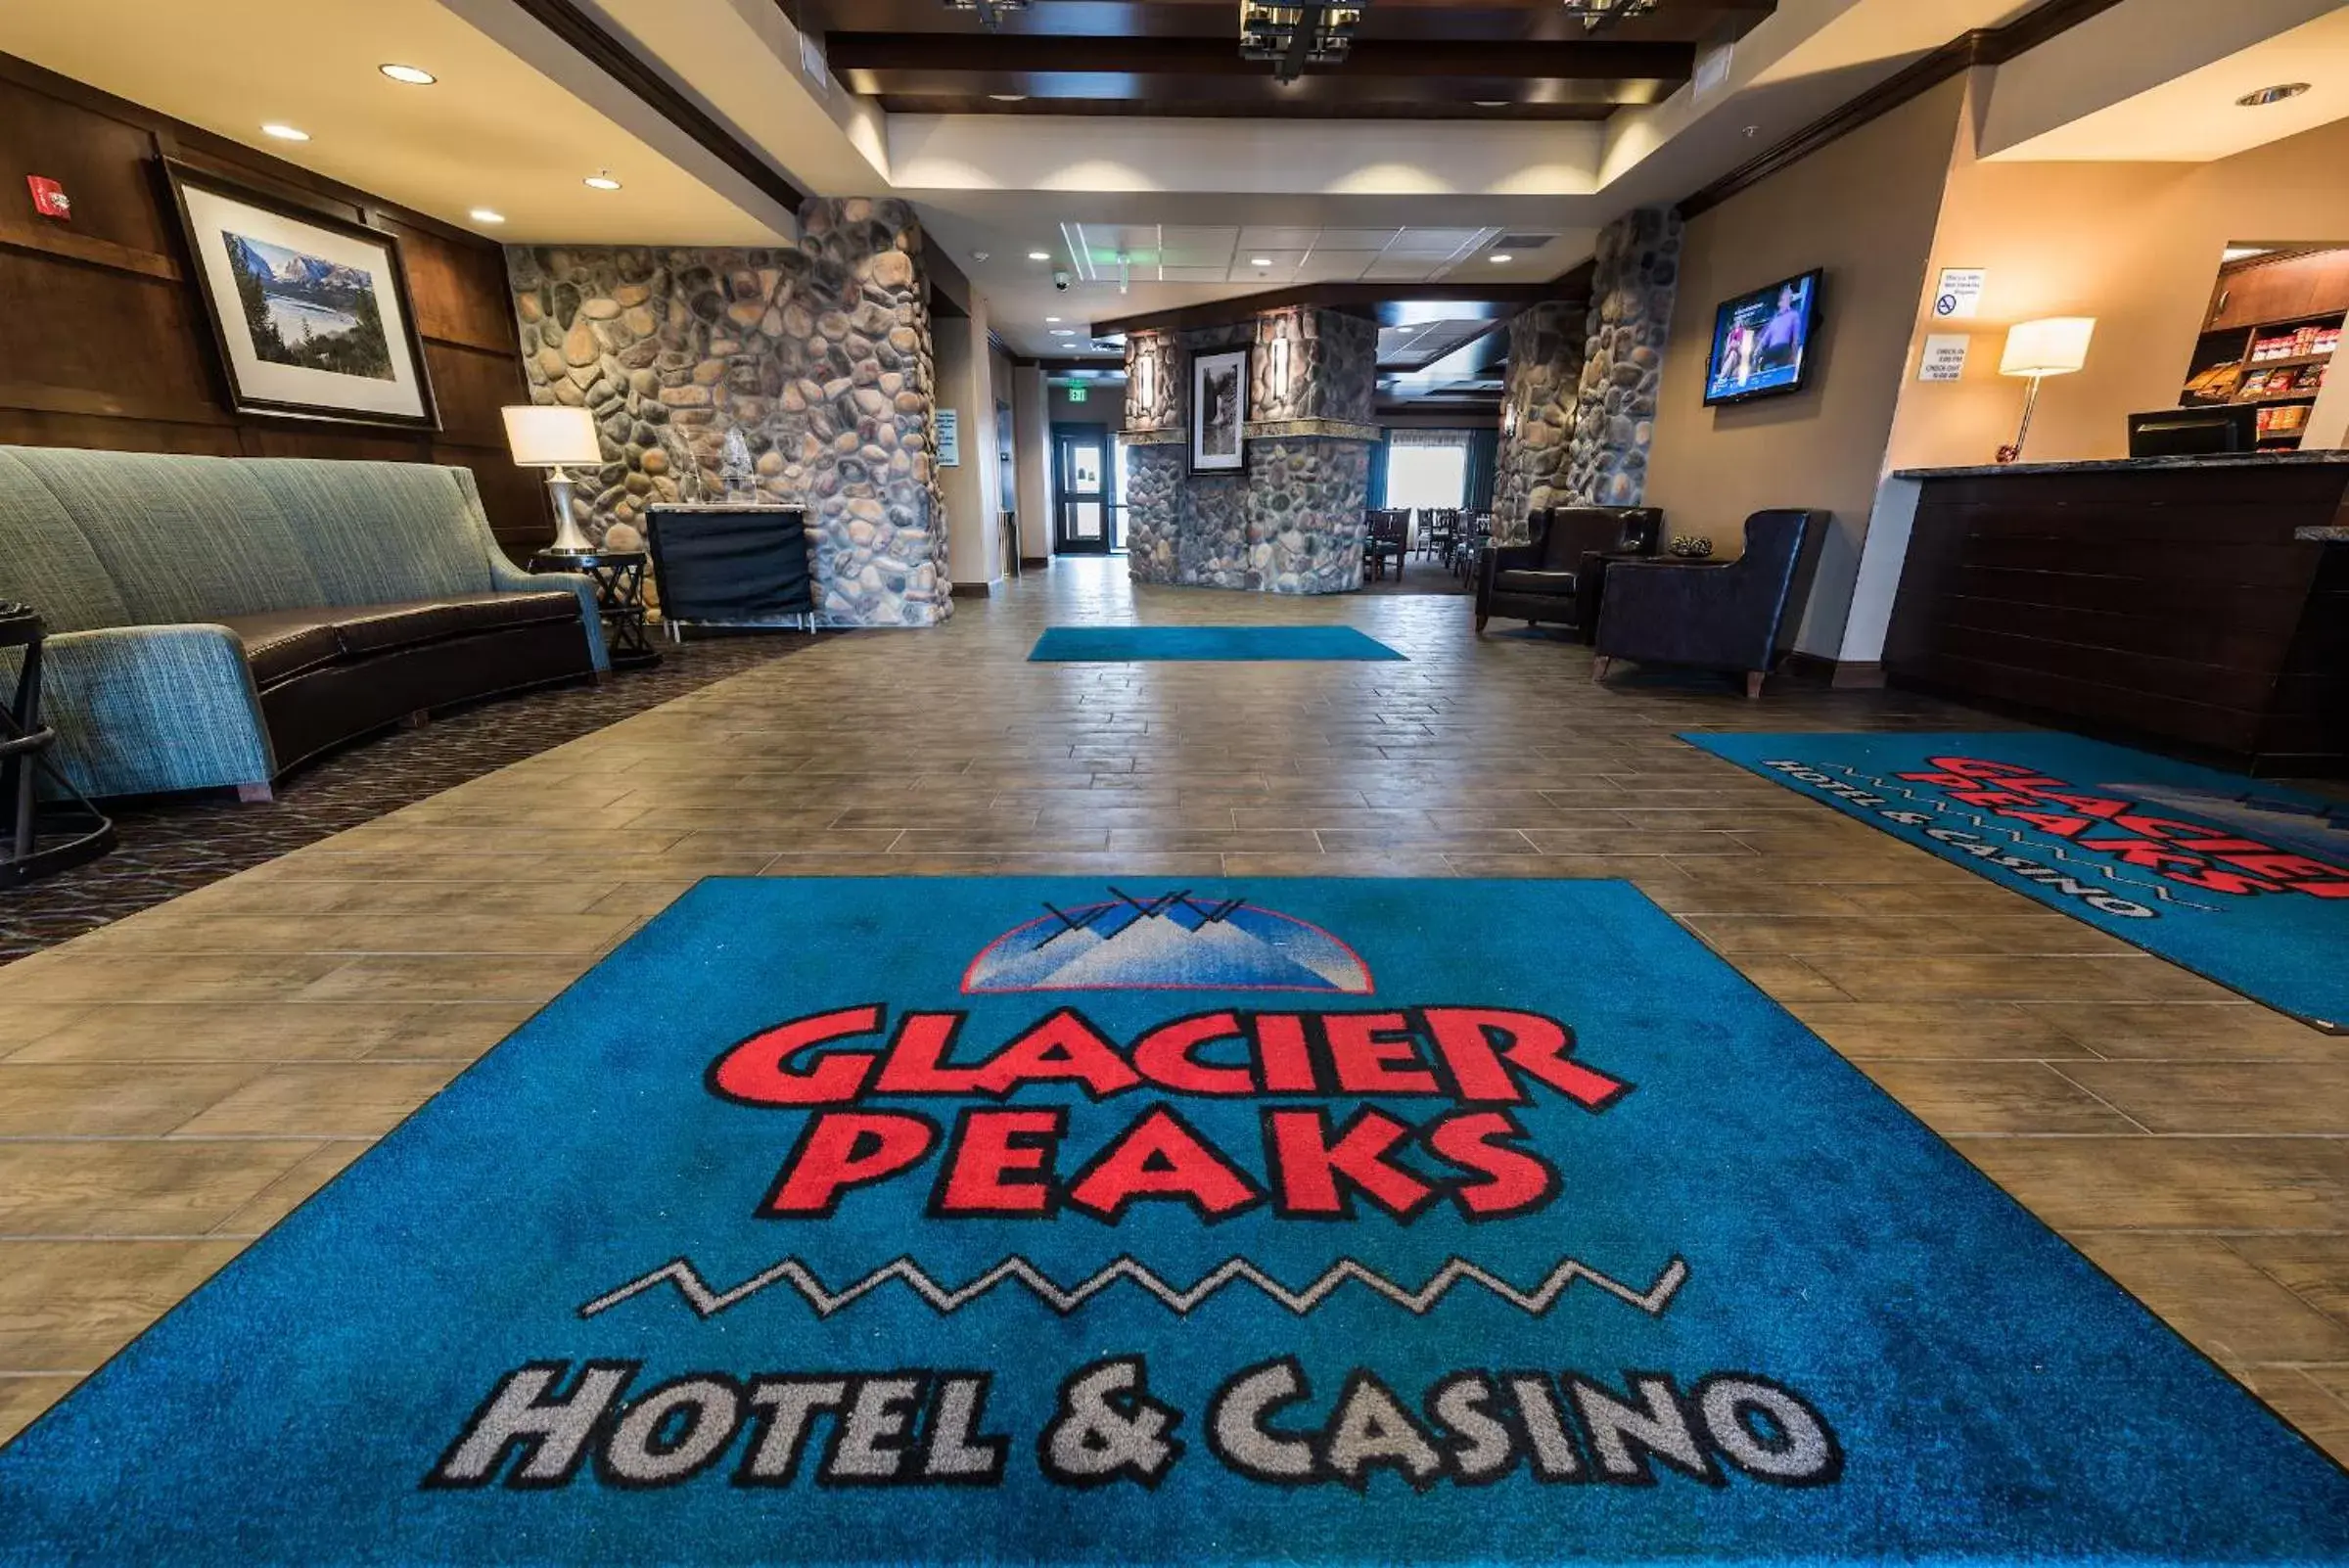 Property logo or sign in Glacier Peaks Hotel